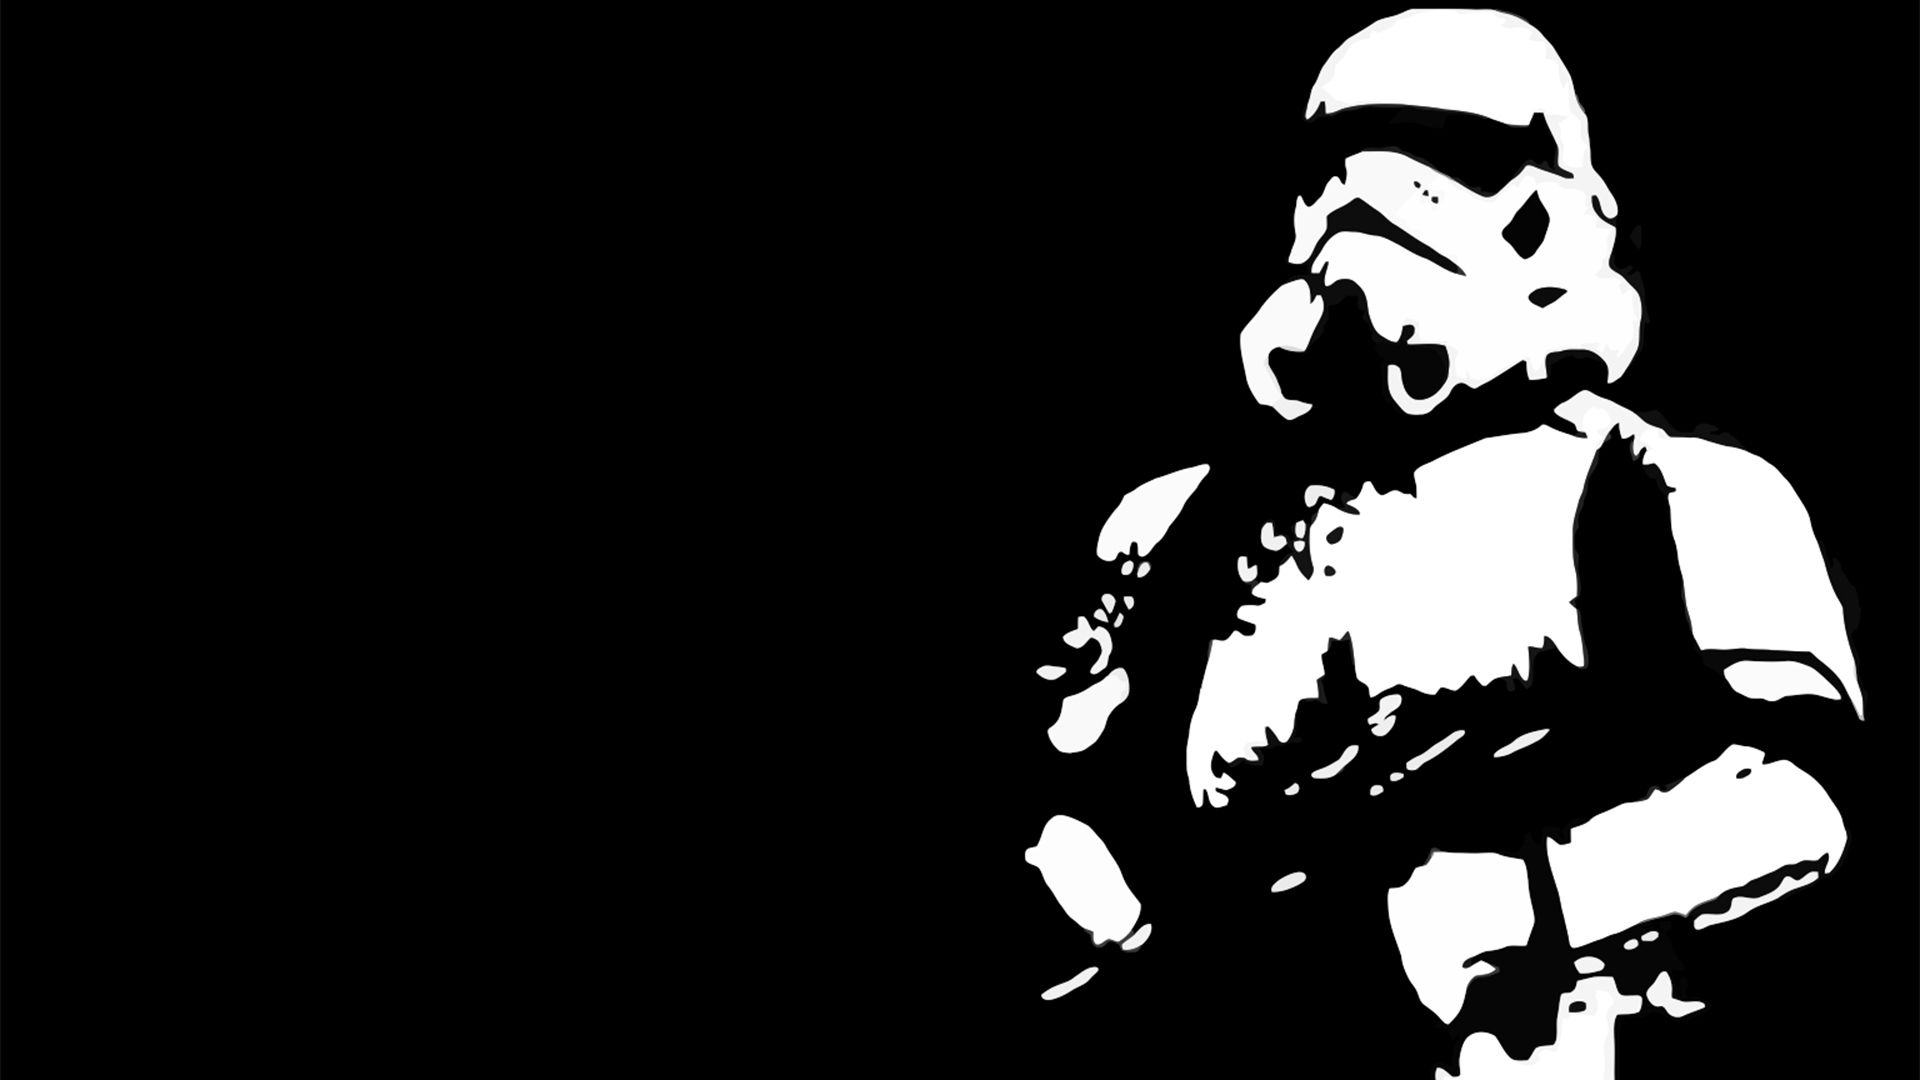 Star Wars Stormtrooper Wallpaper 9 hd background hd screensavers hd